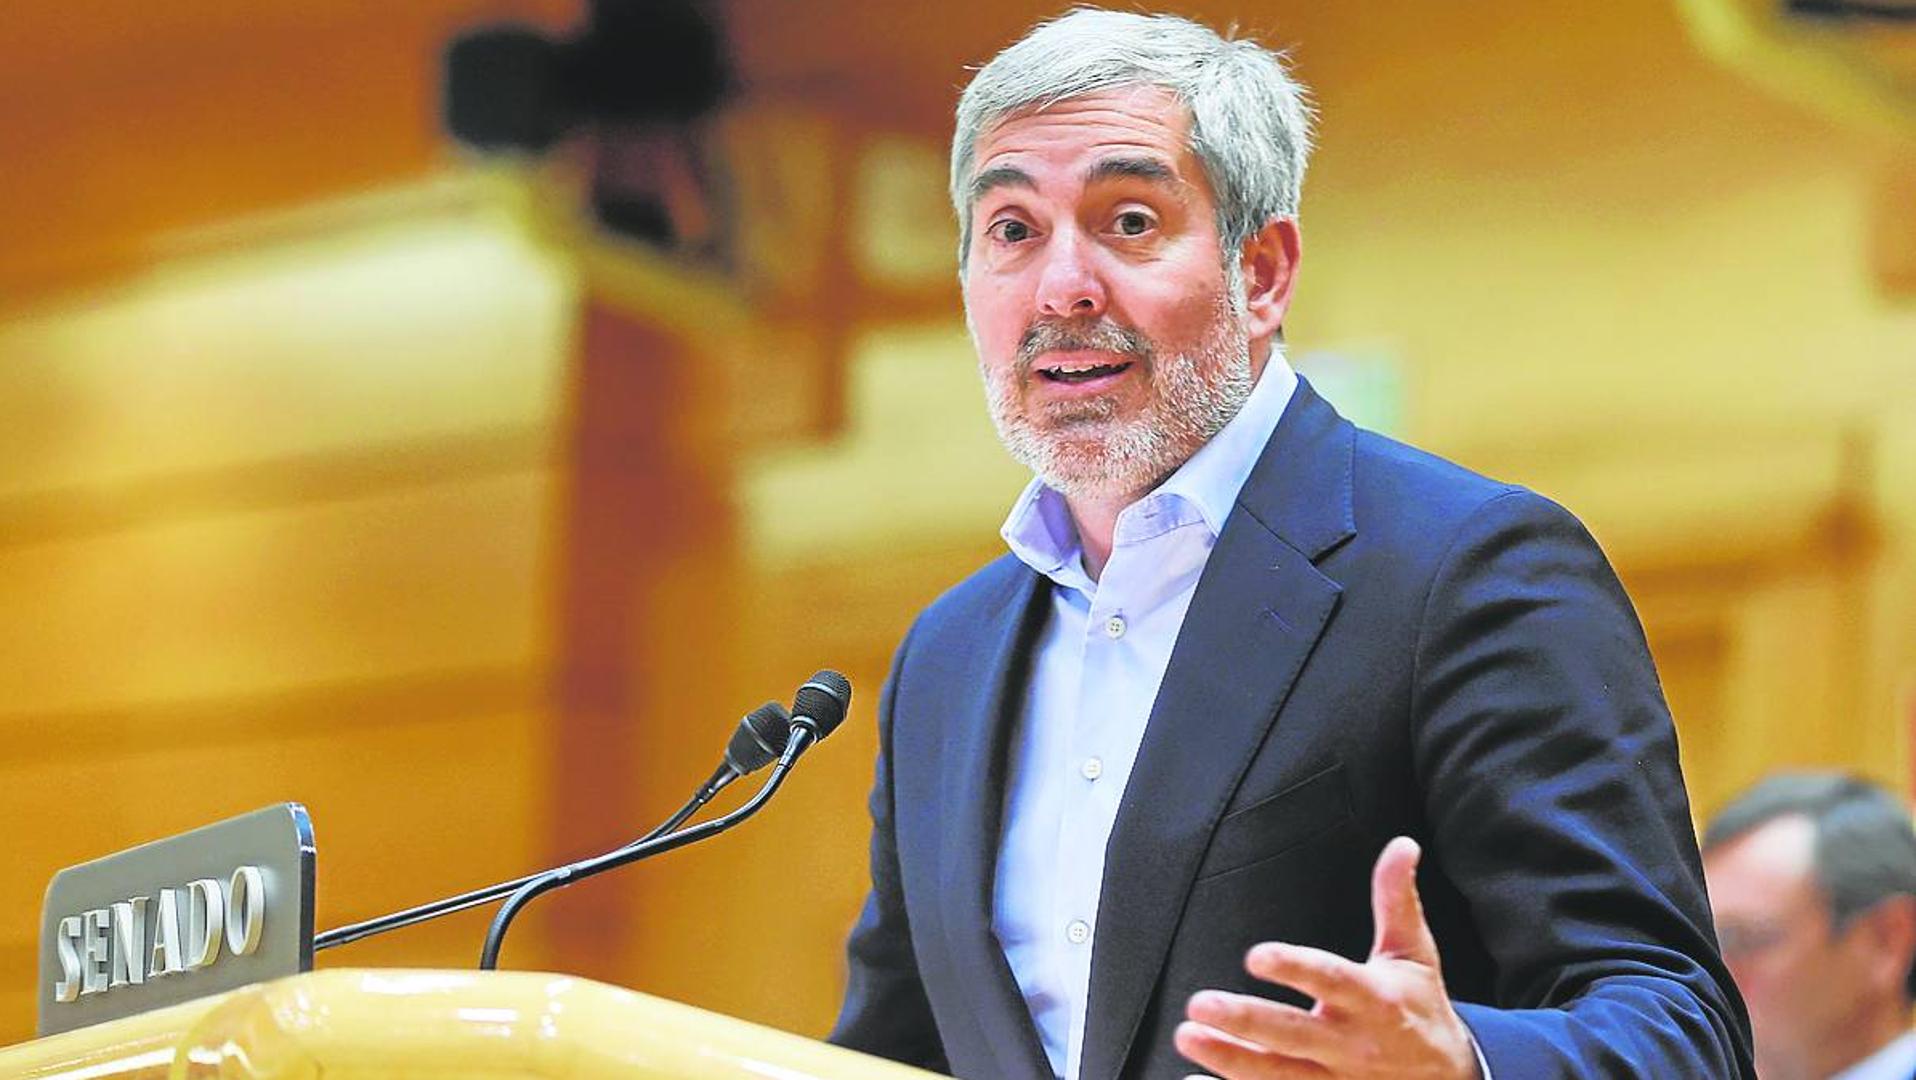 Clavijo criticizes Sánchez's "lack of will" to fulfill the Canarian agenda